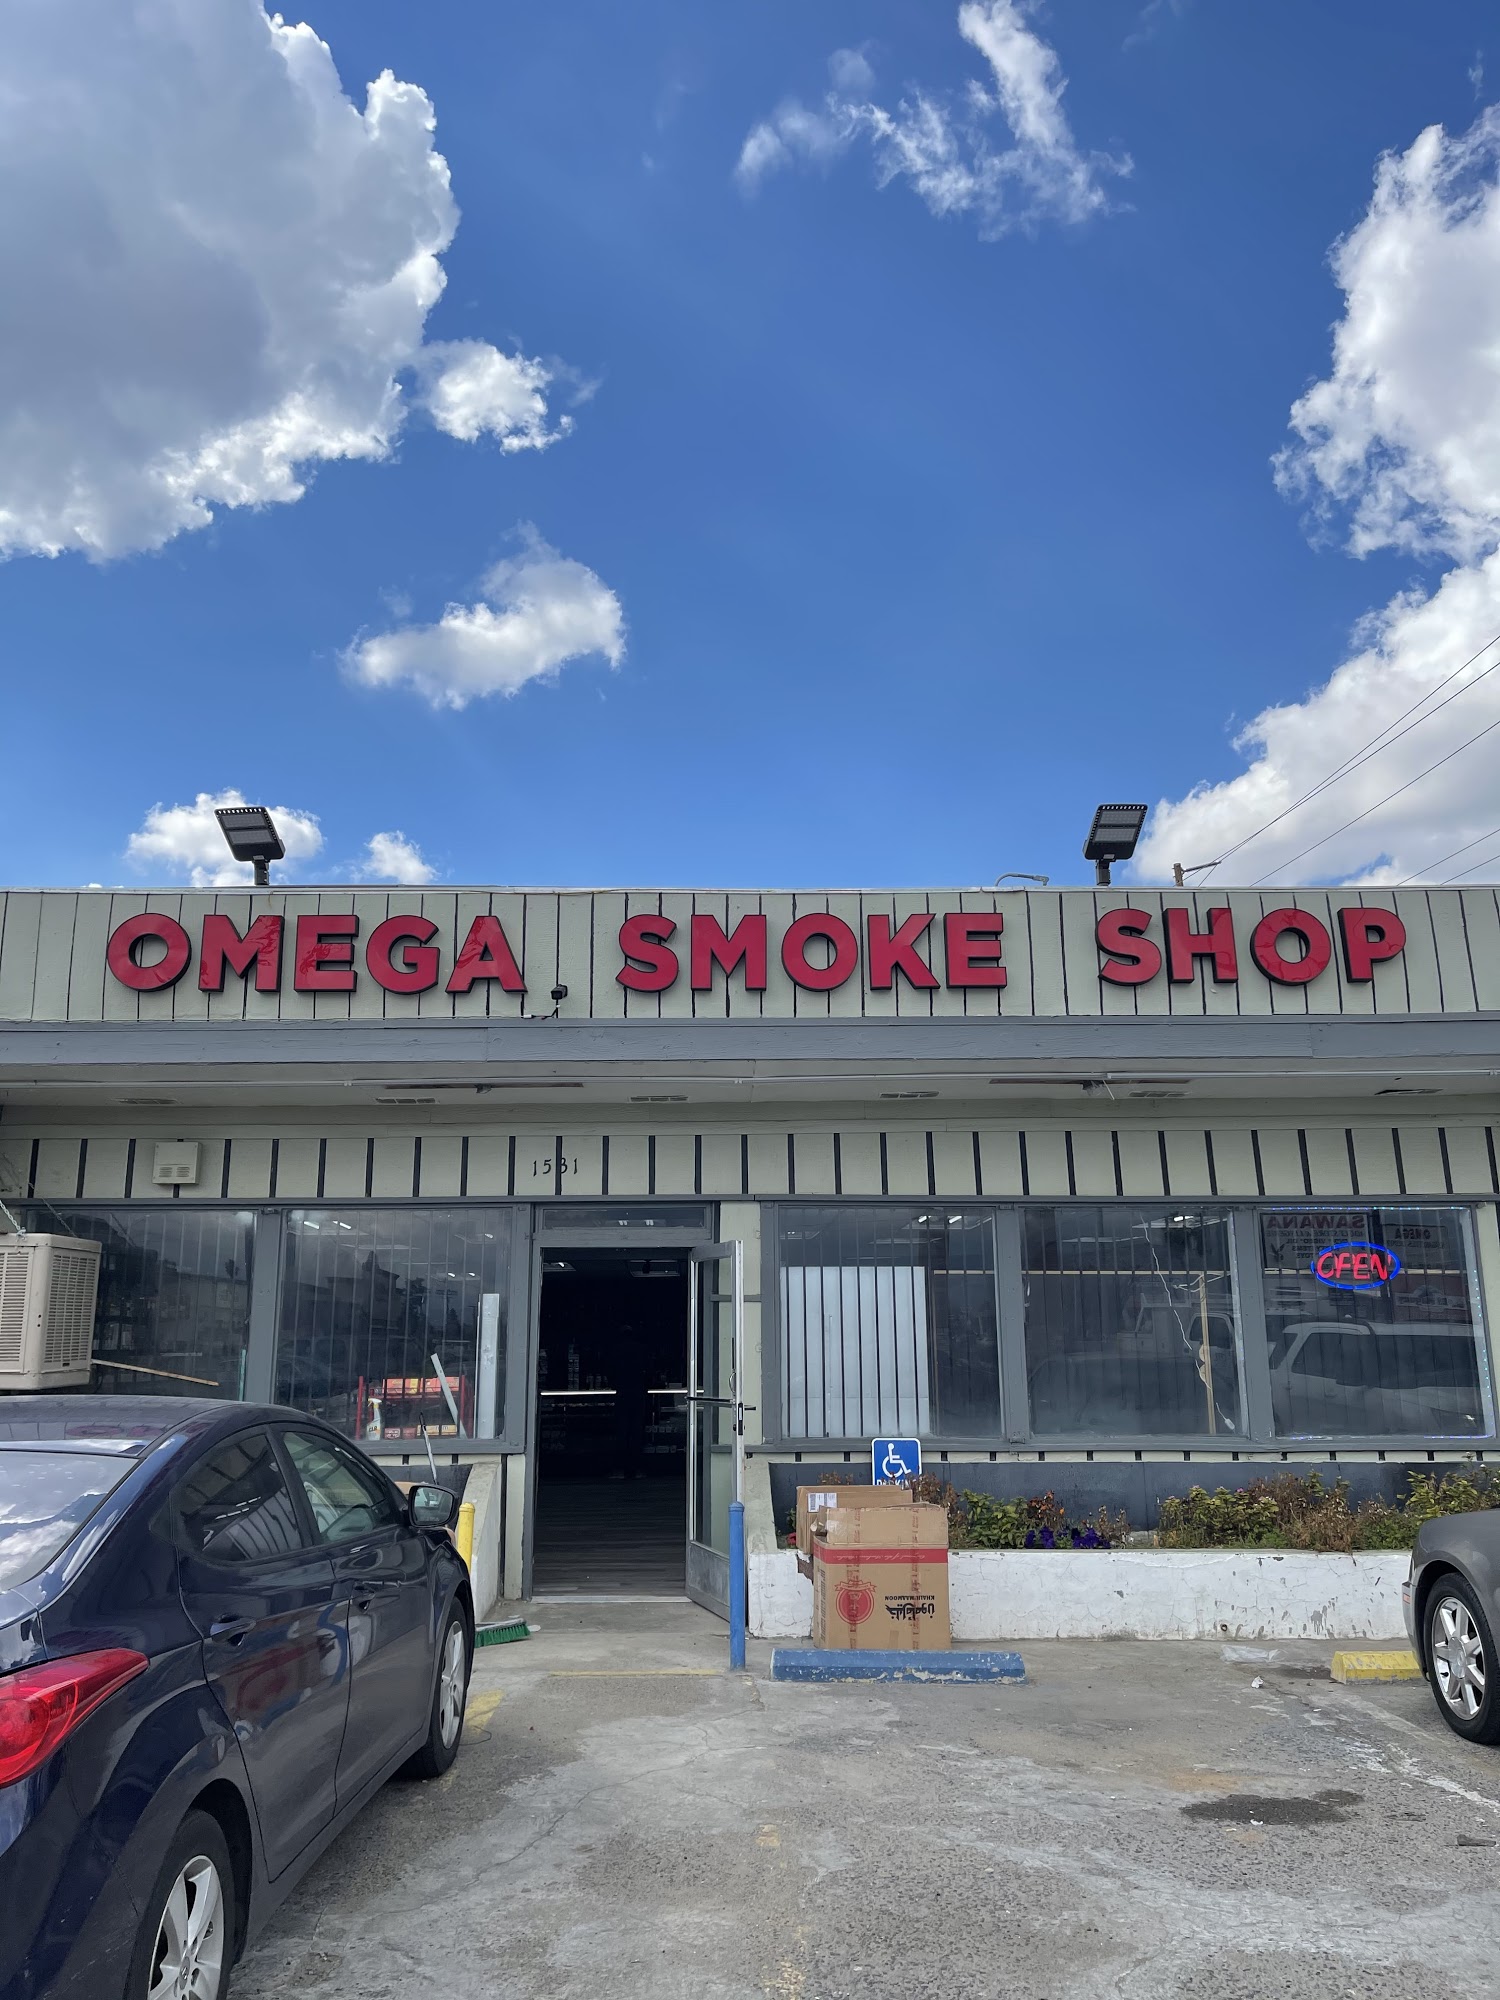 Omega Smoke shop